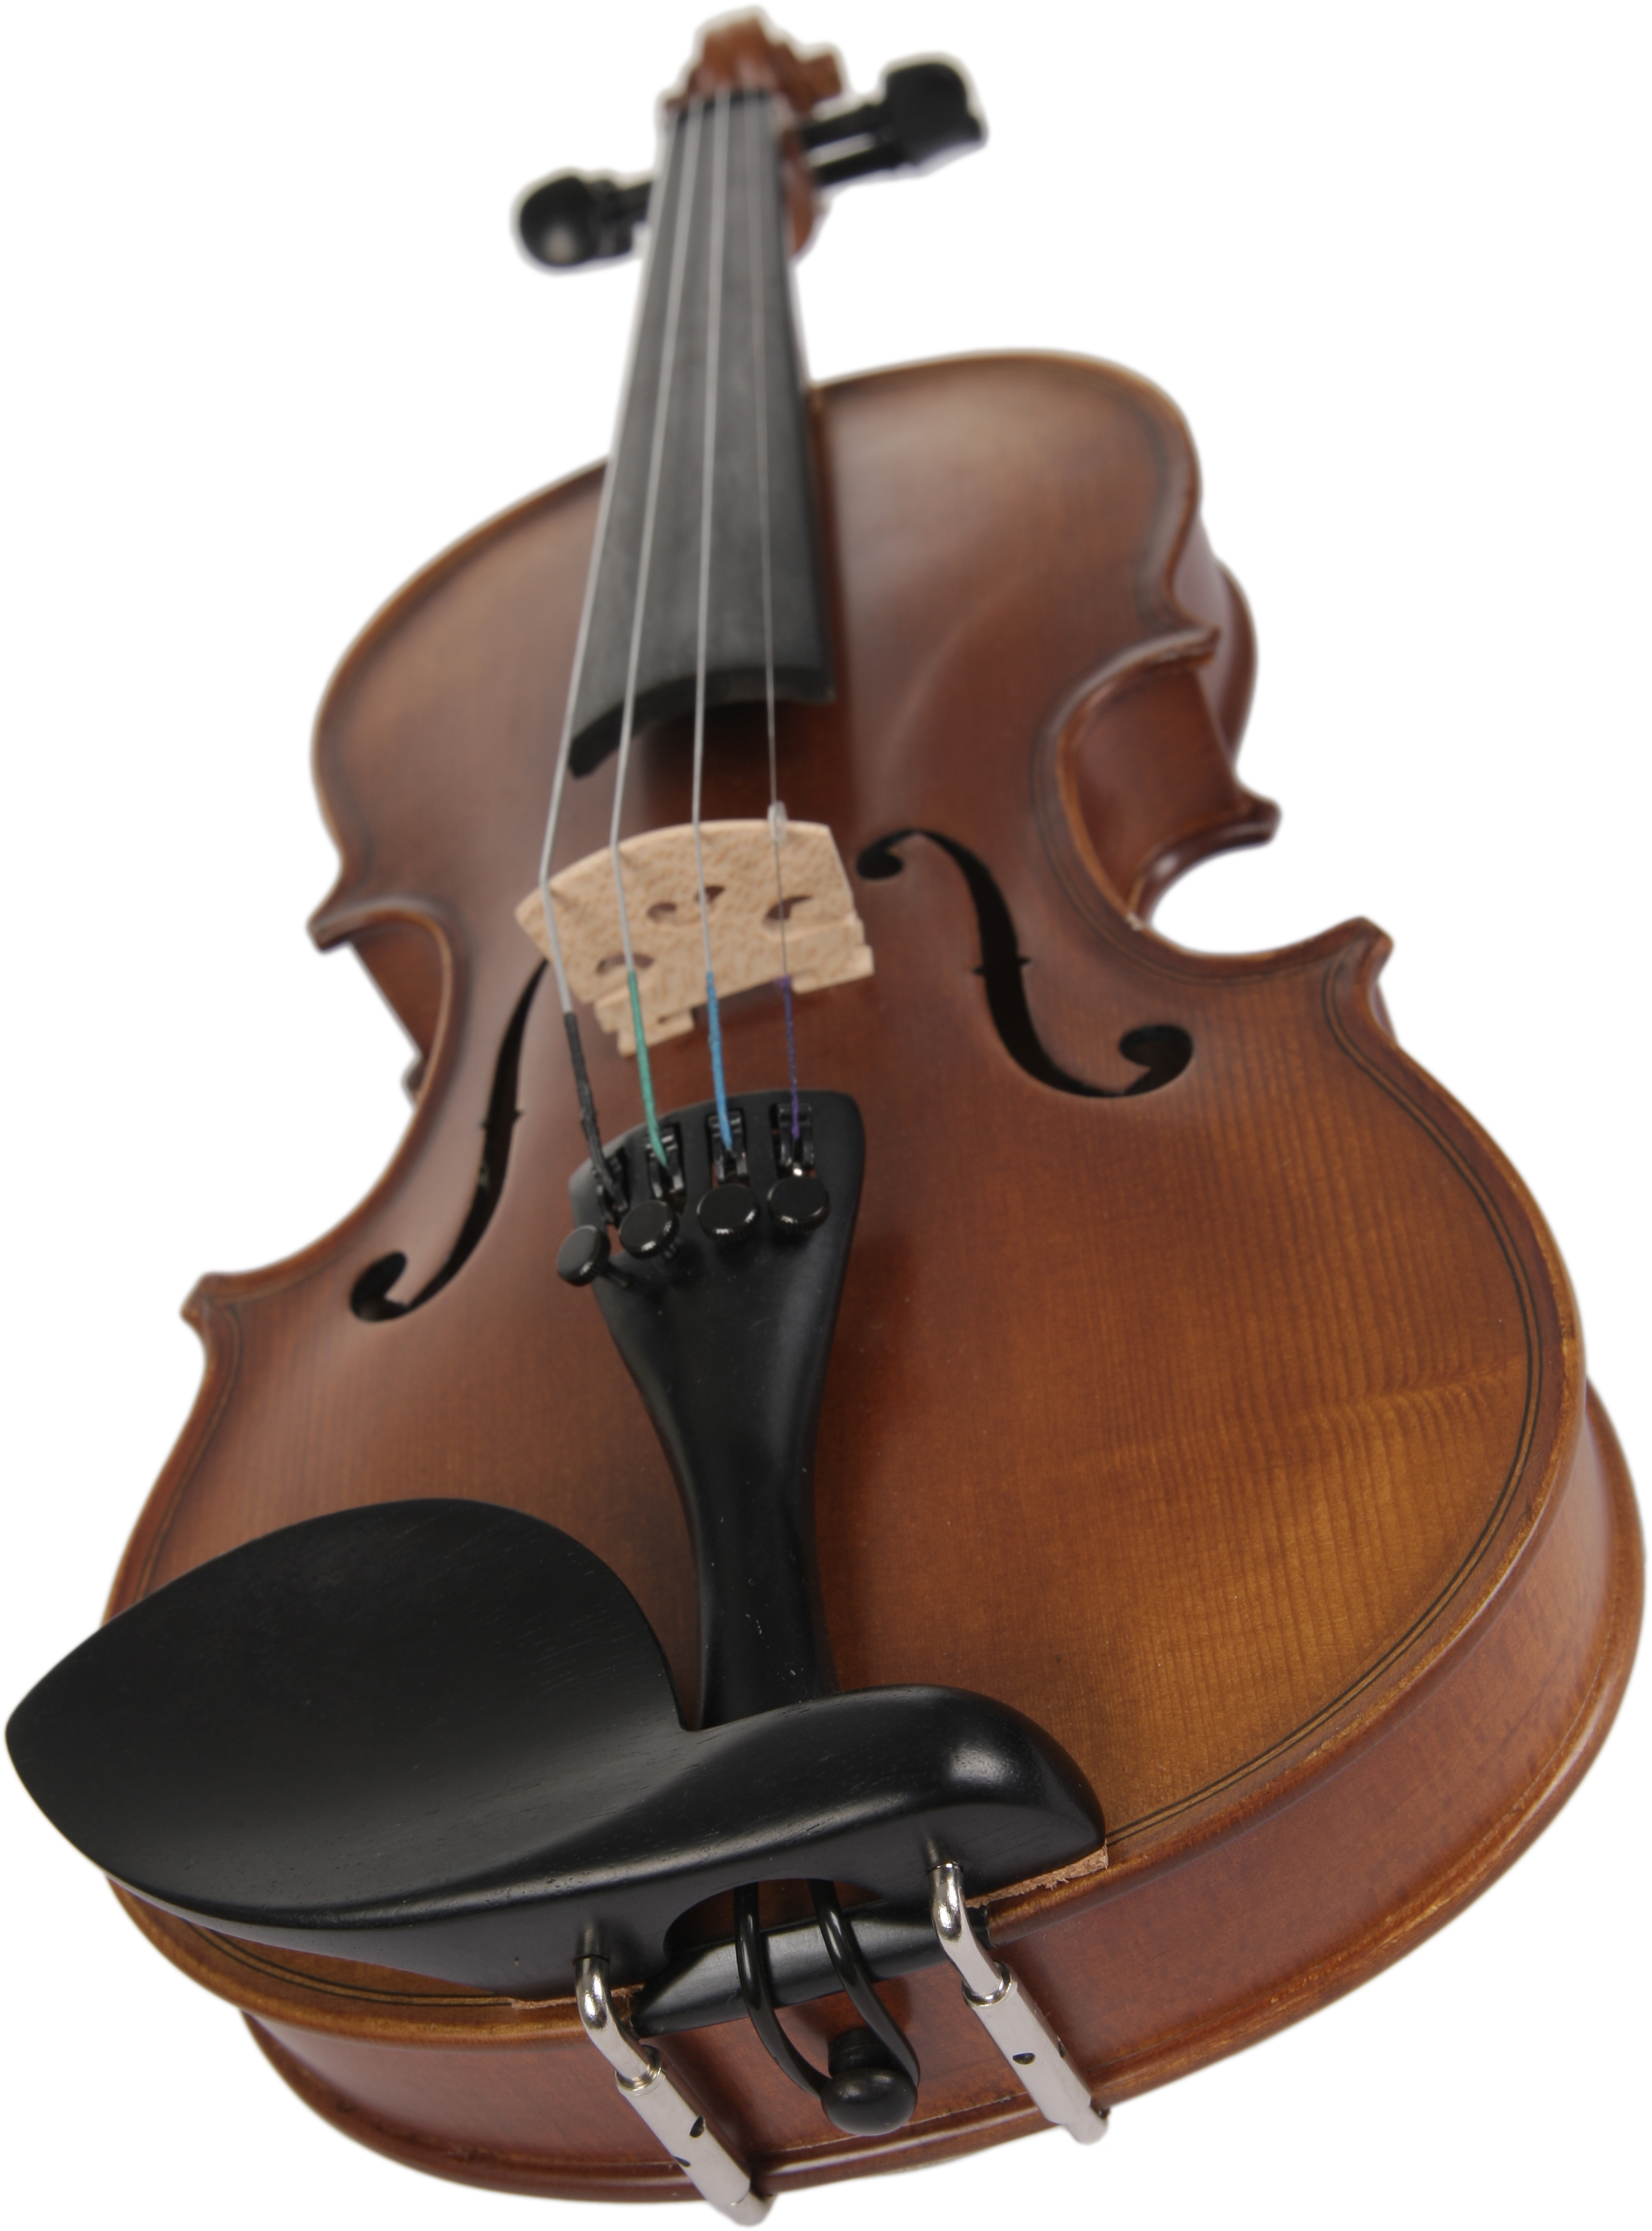 Violingarnitur Mod. 300 1/8